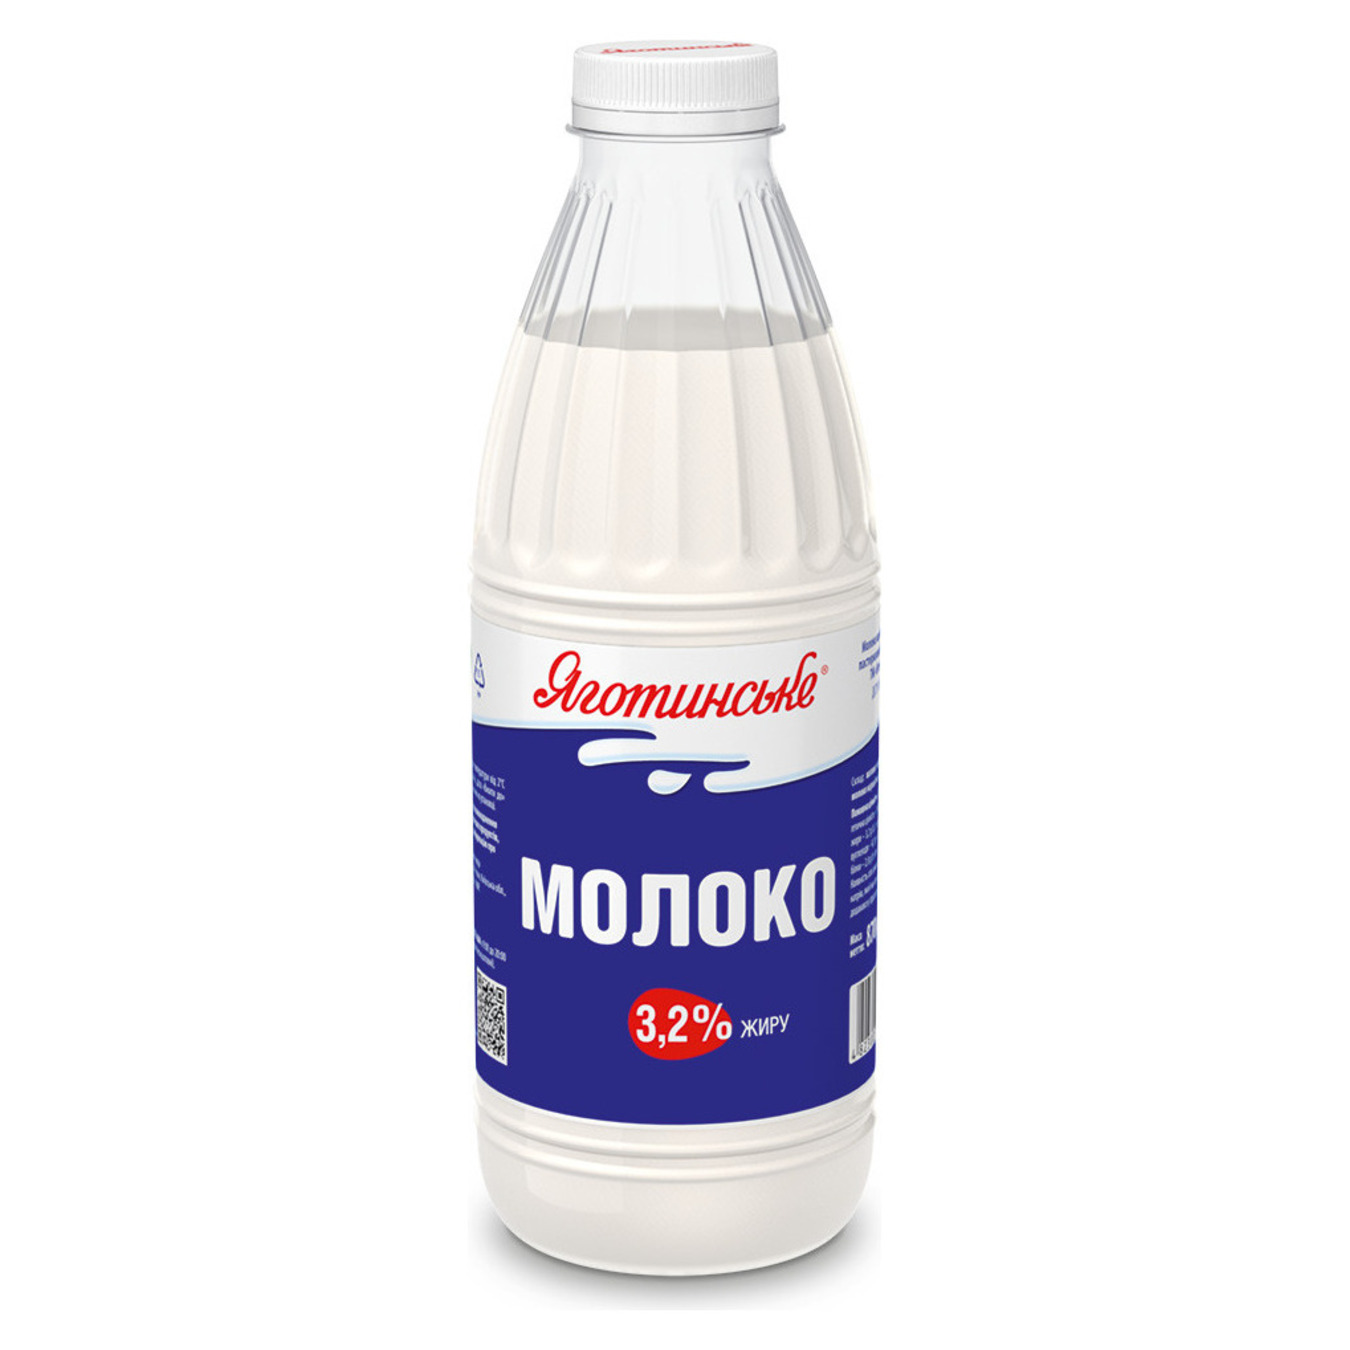 Yagotynske Pasteurized Milk 3,2% 870g